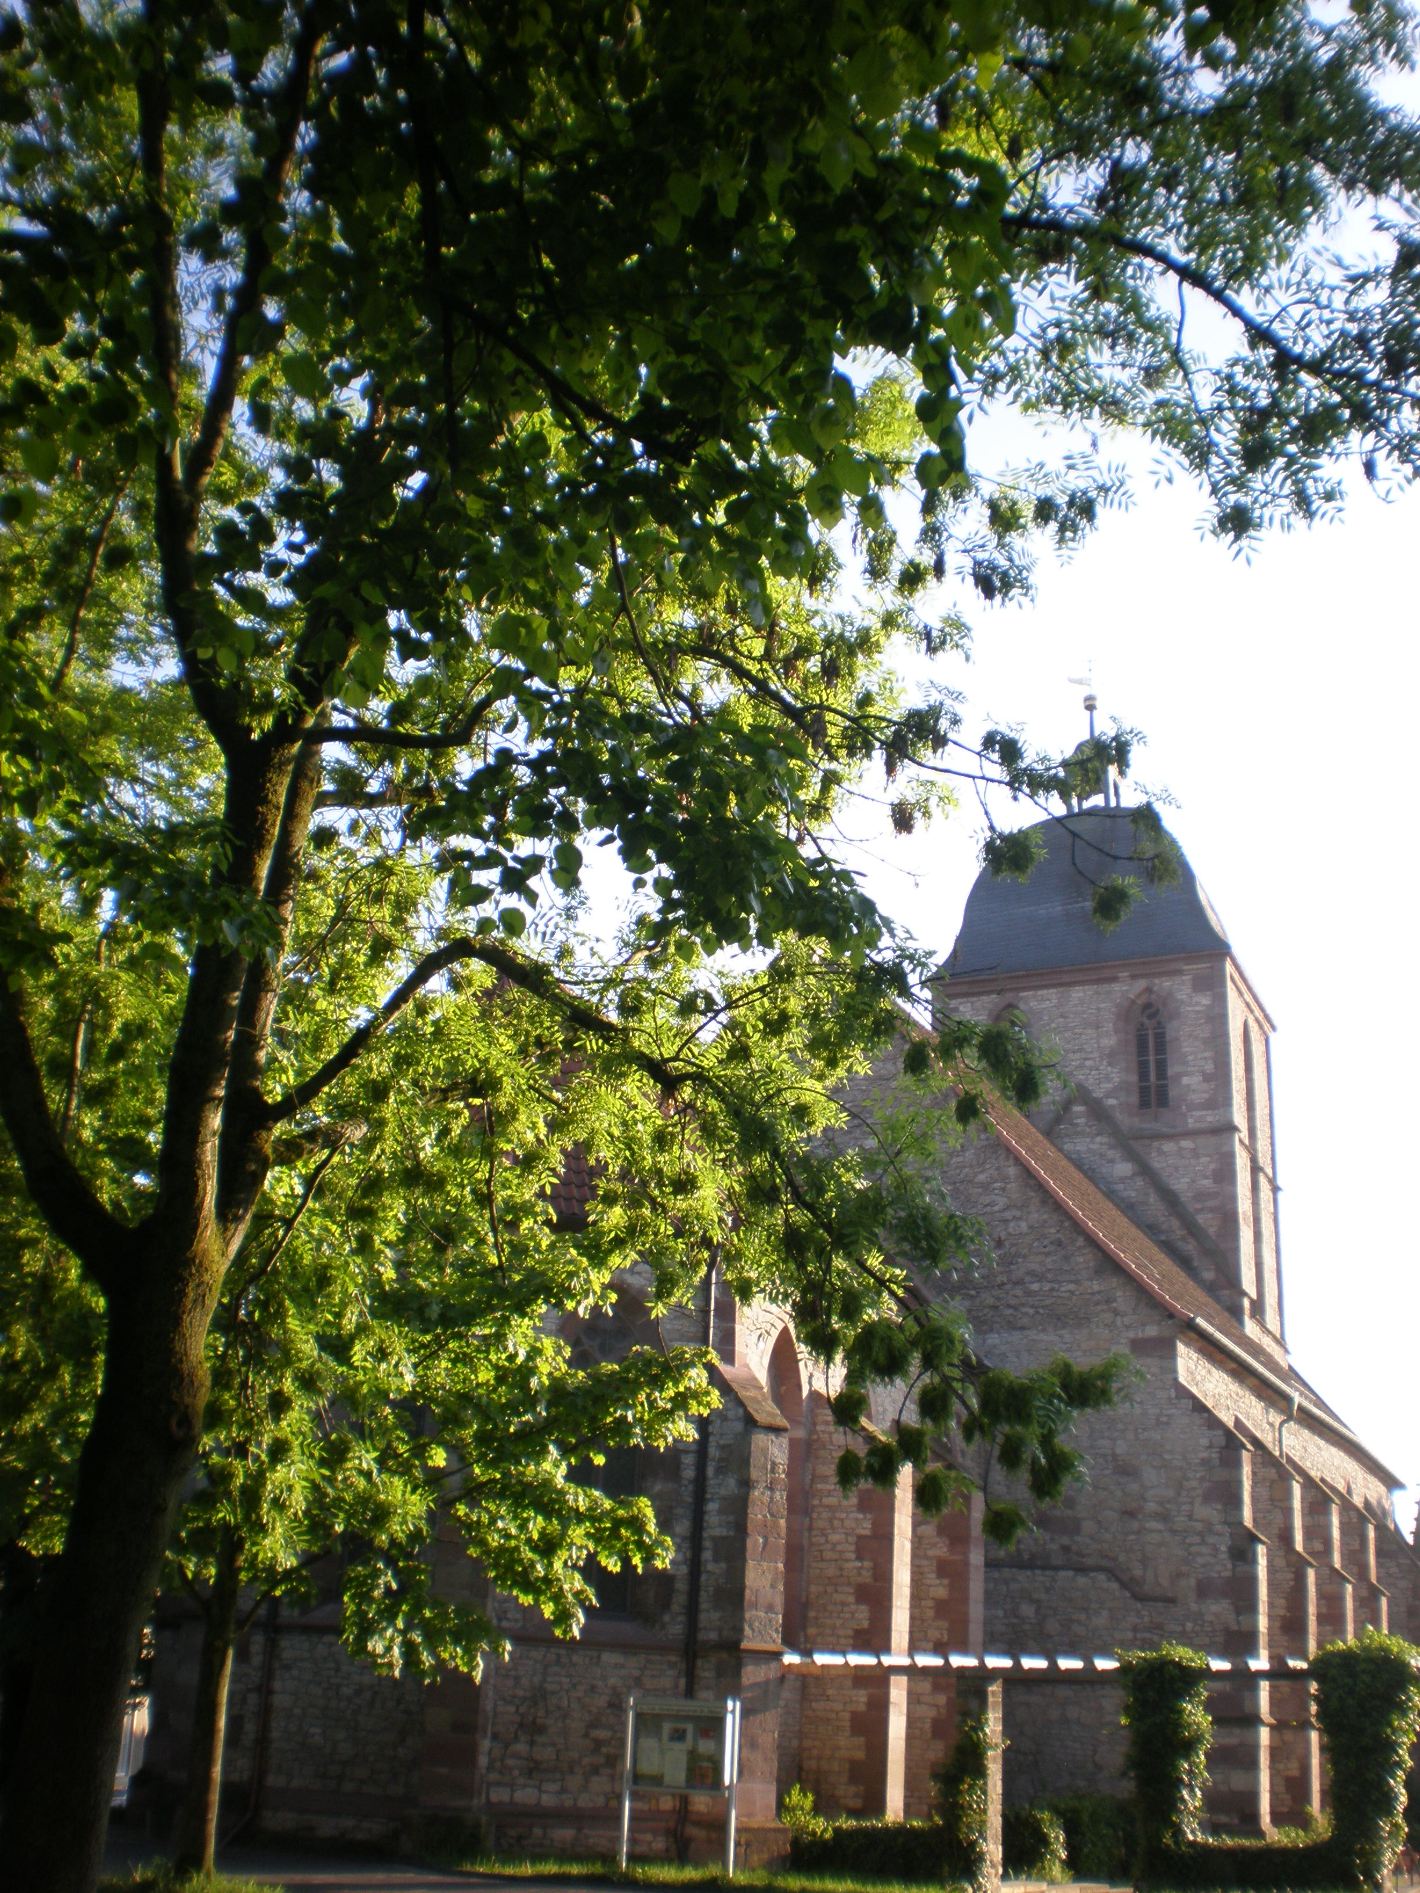 Albanikirche Gottingen, photo by David Nice